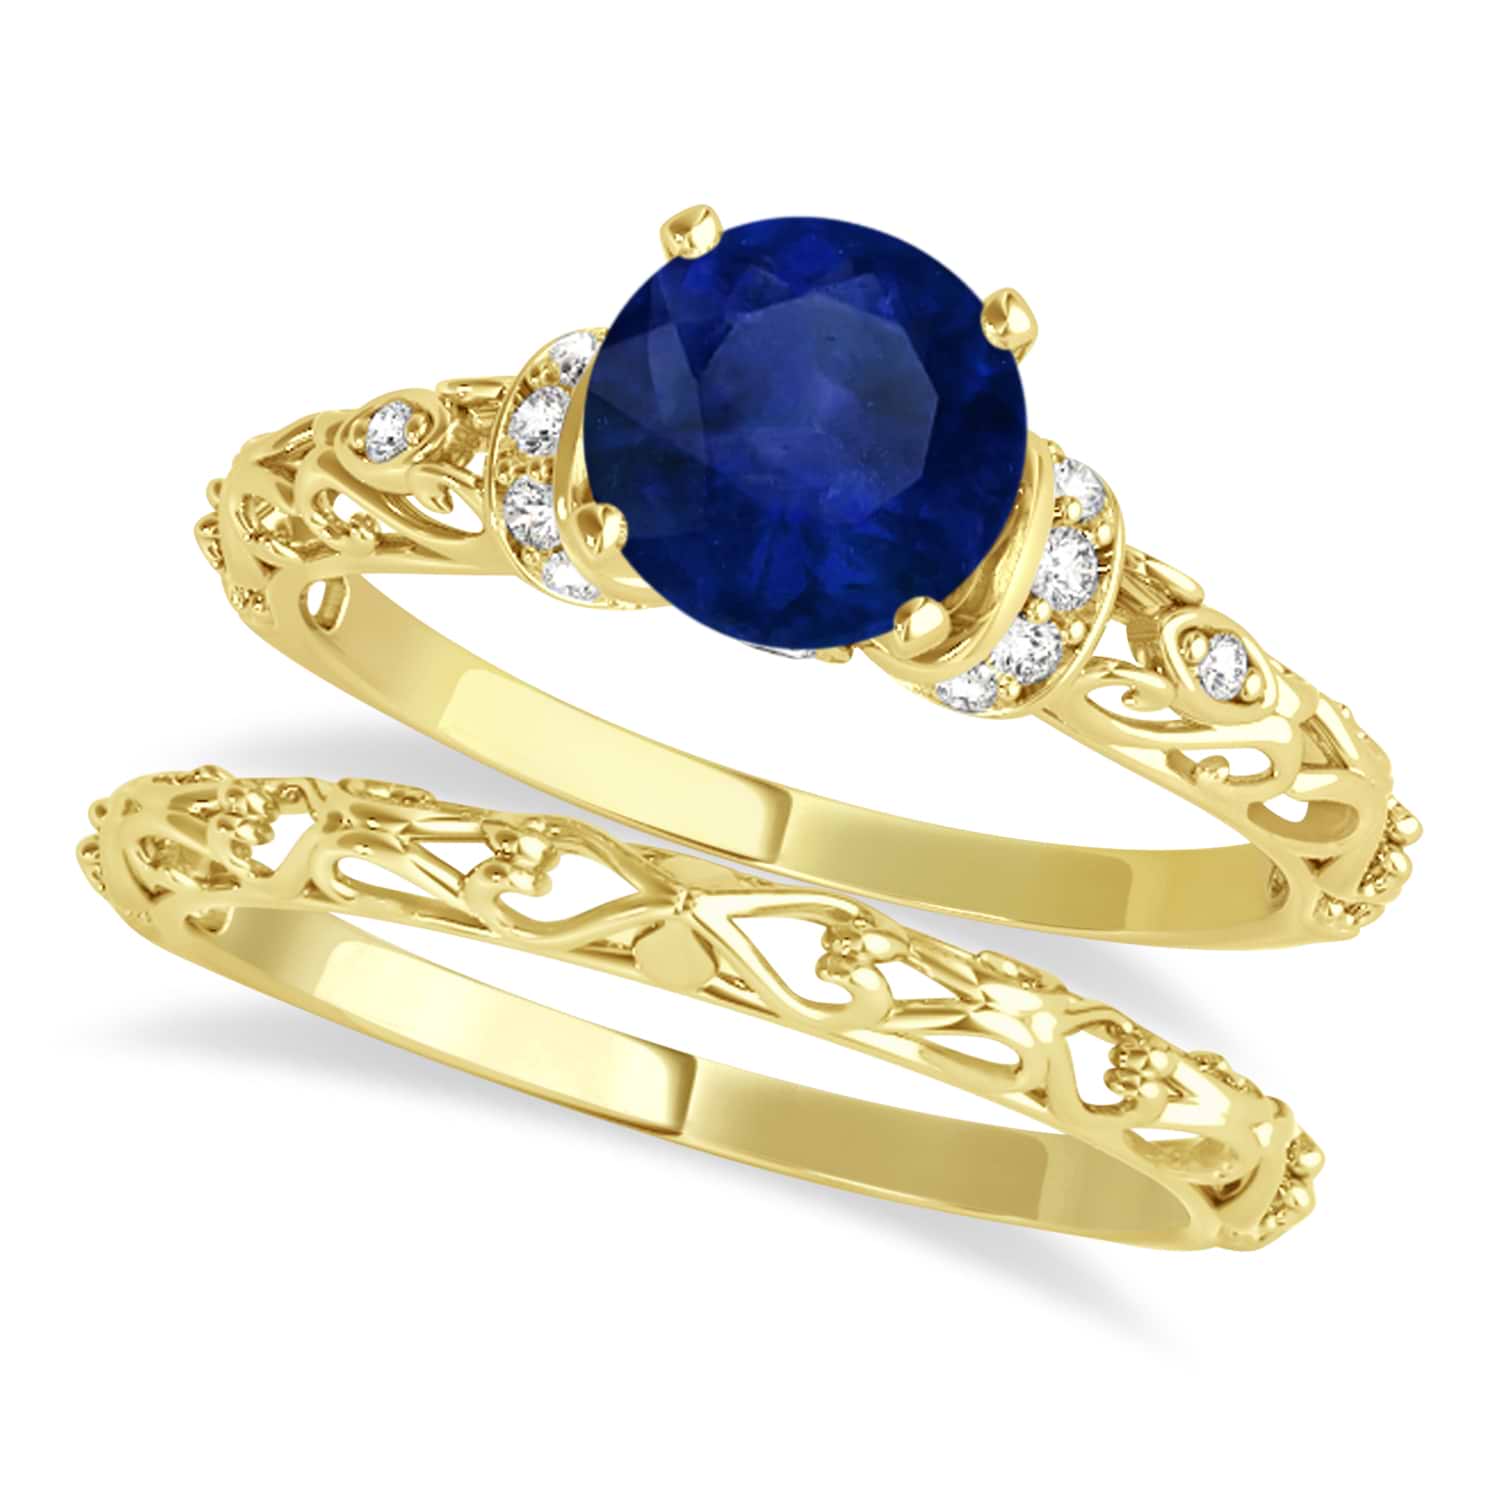 Blue Sapphire & Diamond Antique Bridal Set 14k Yellow Gold (1.62ct)